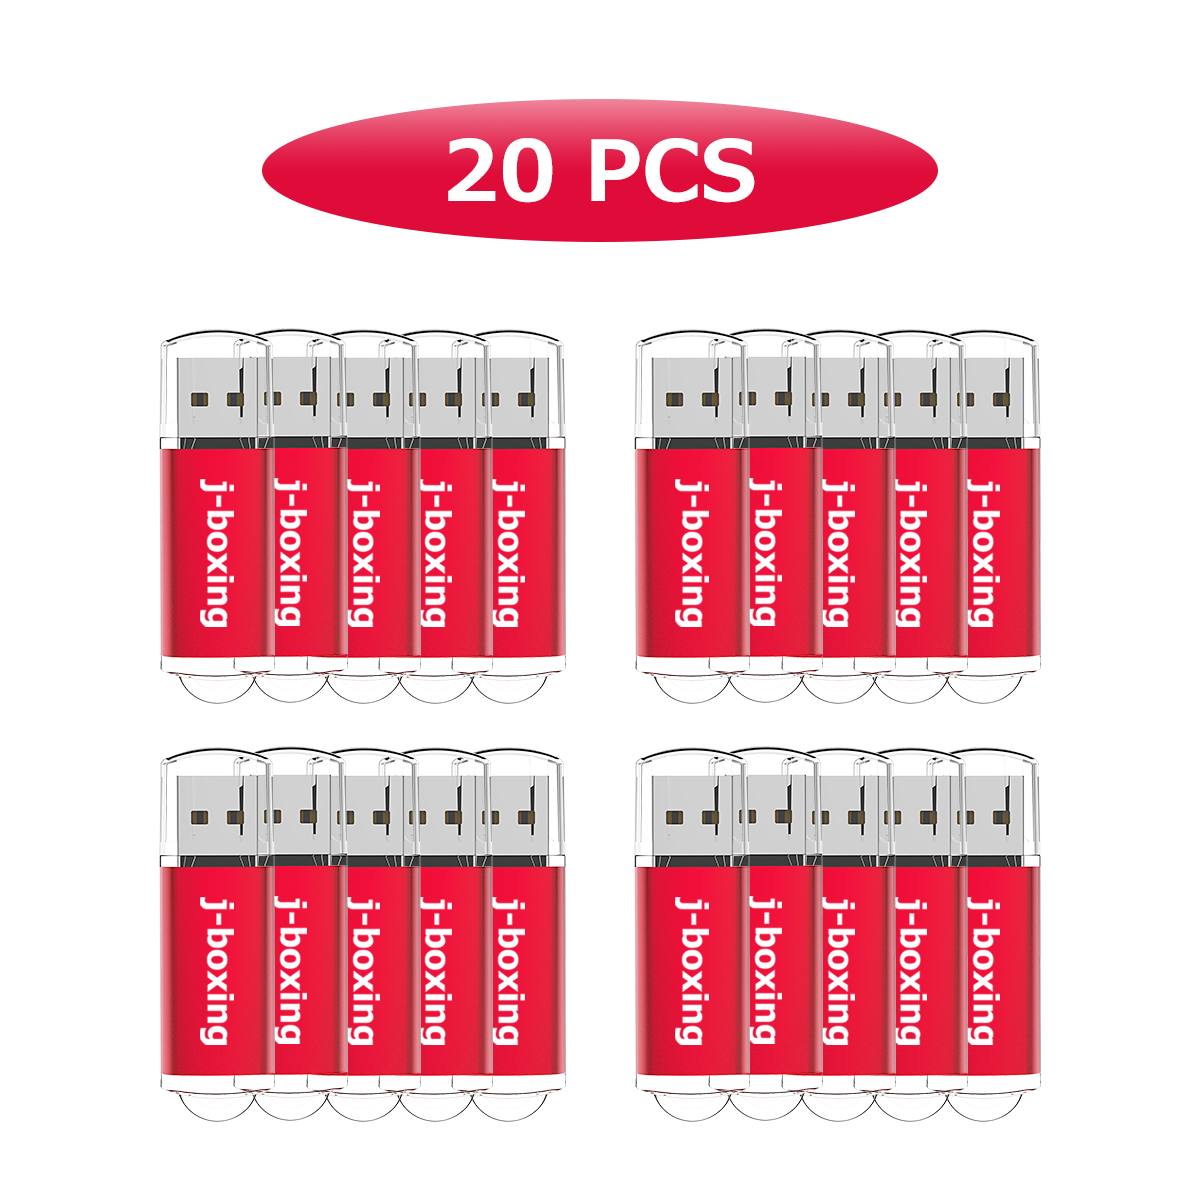 20pcs da 512 MB USB 2.0 Drive Flash Flash Drive Drive ad alta velocità Memory Stick Archivia